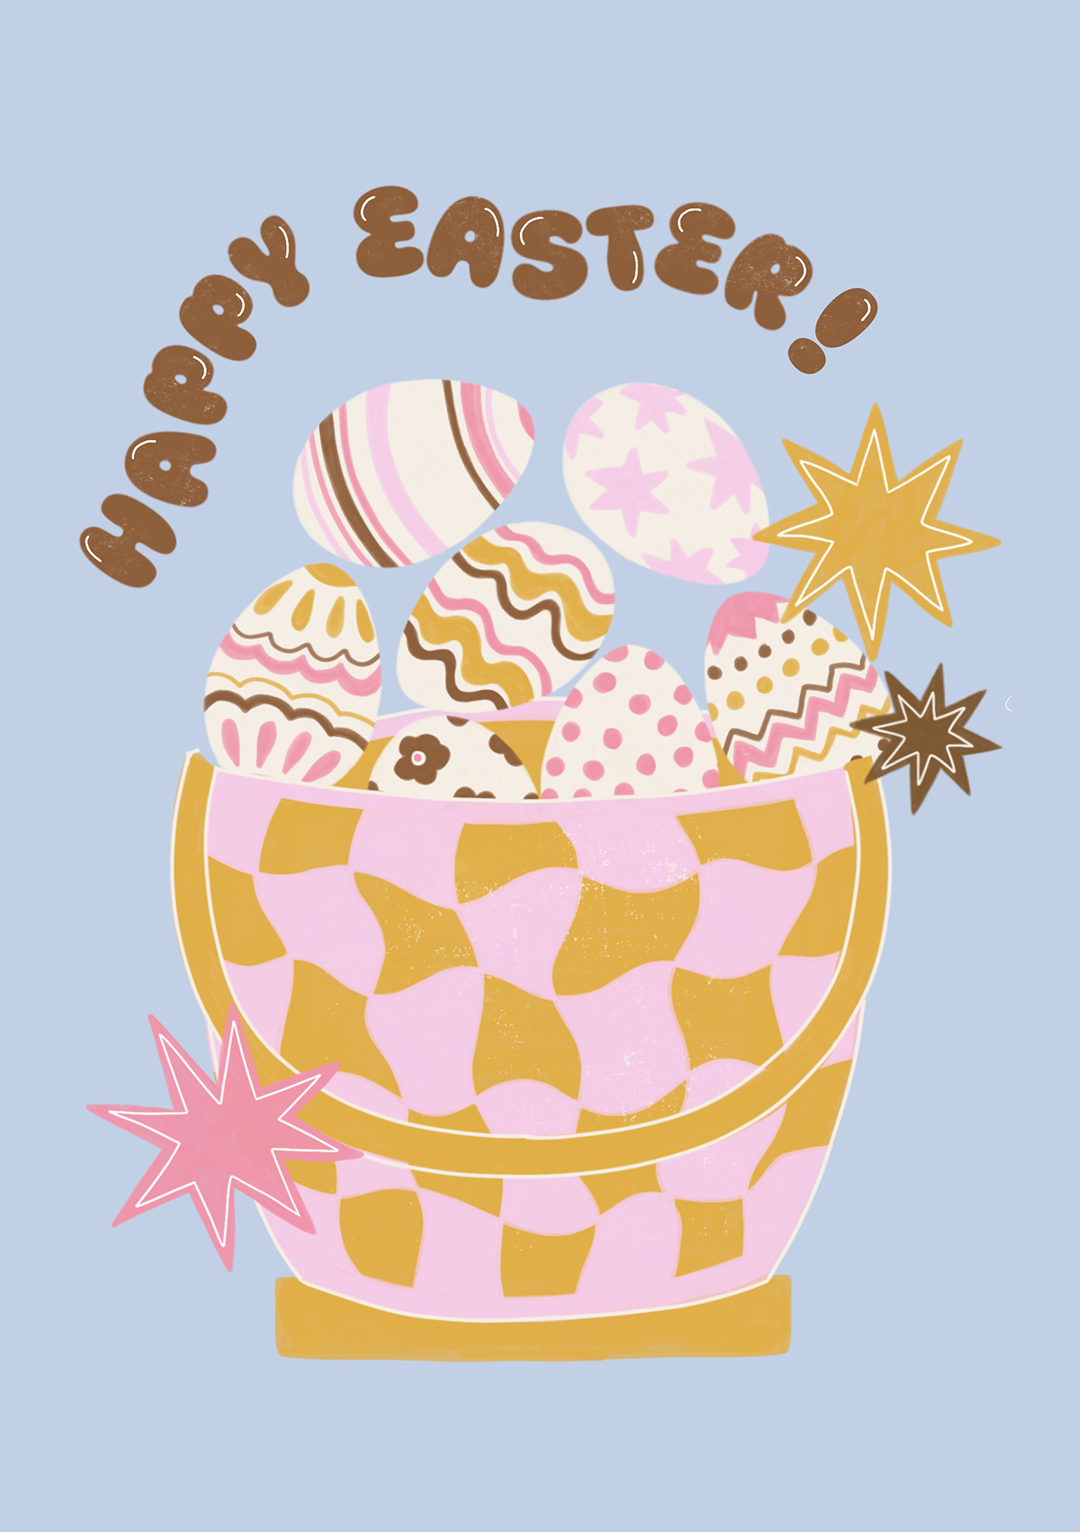 Happy Easter - Egg Basket Greeting Card